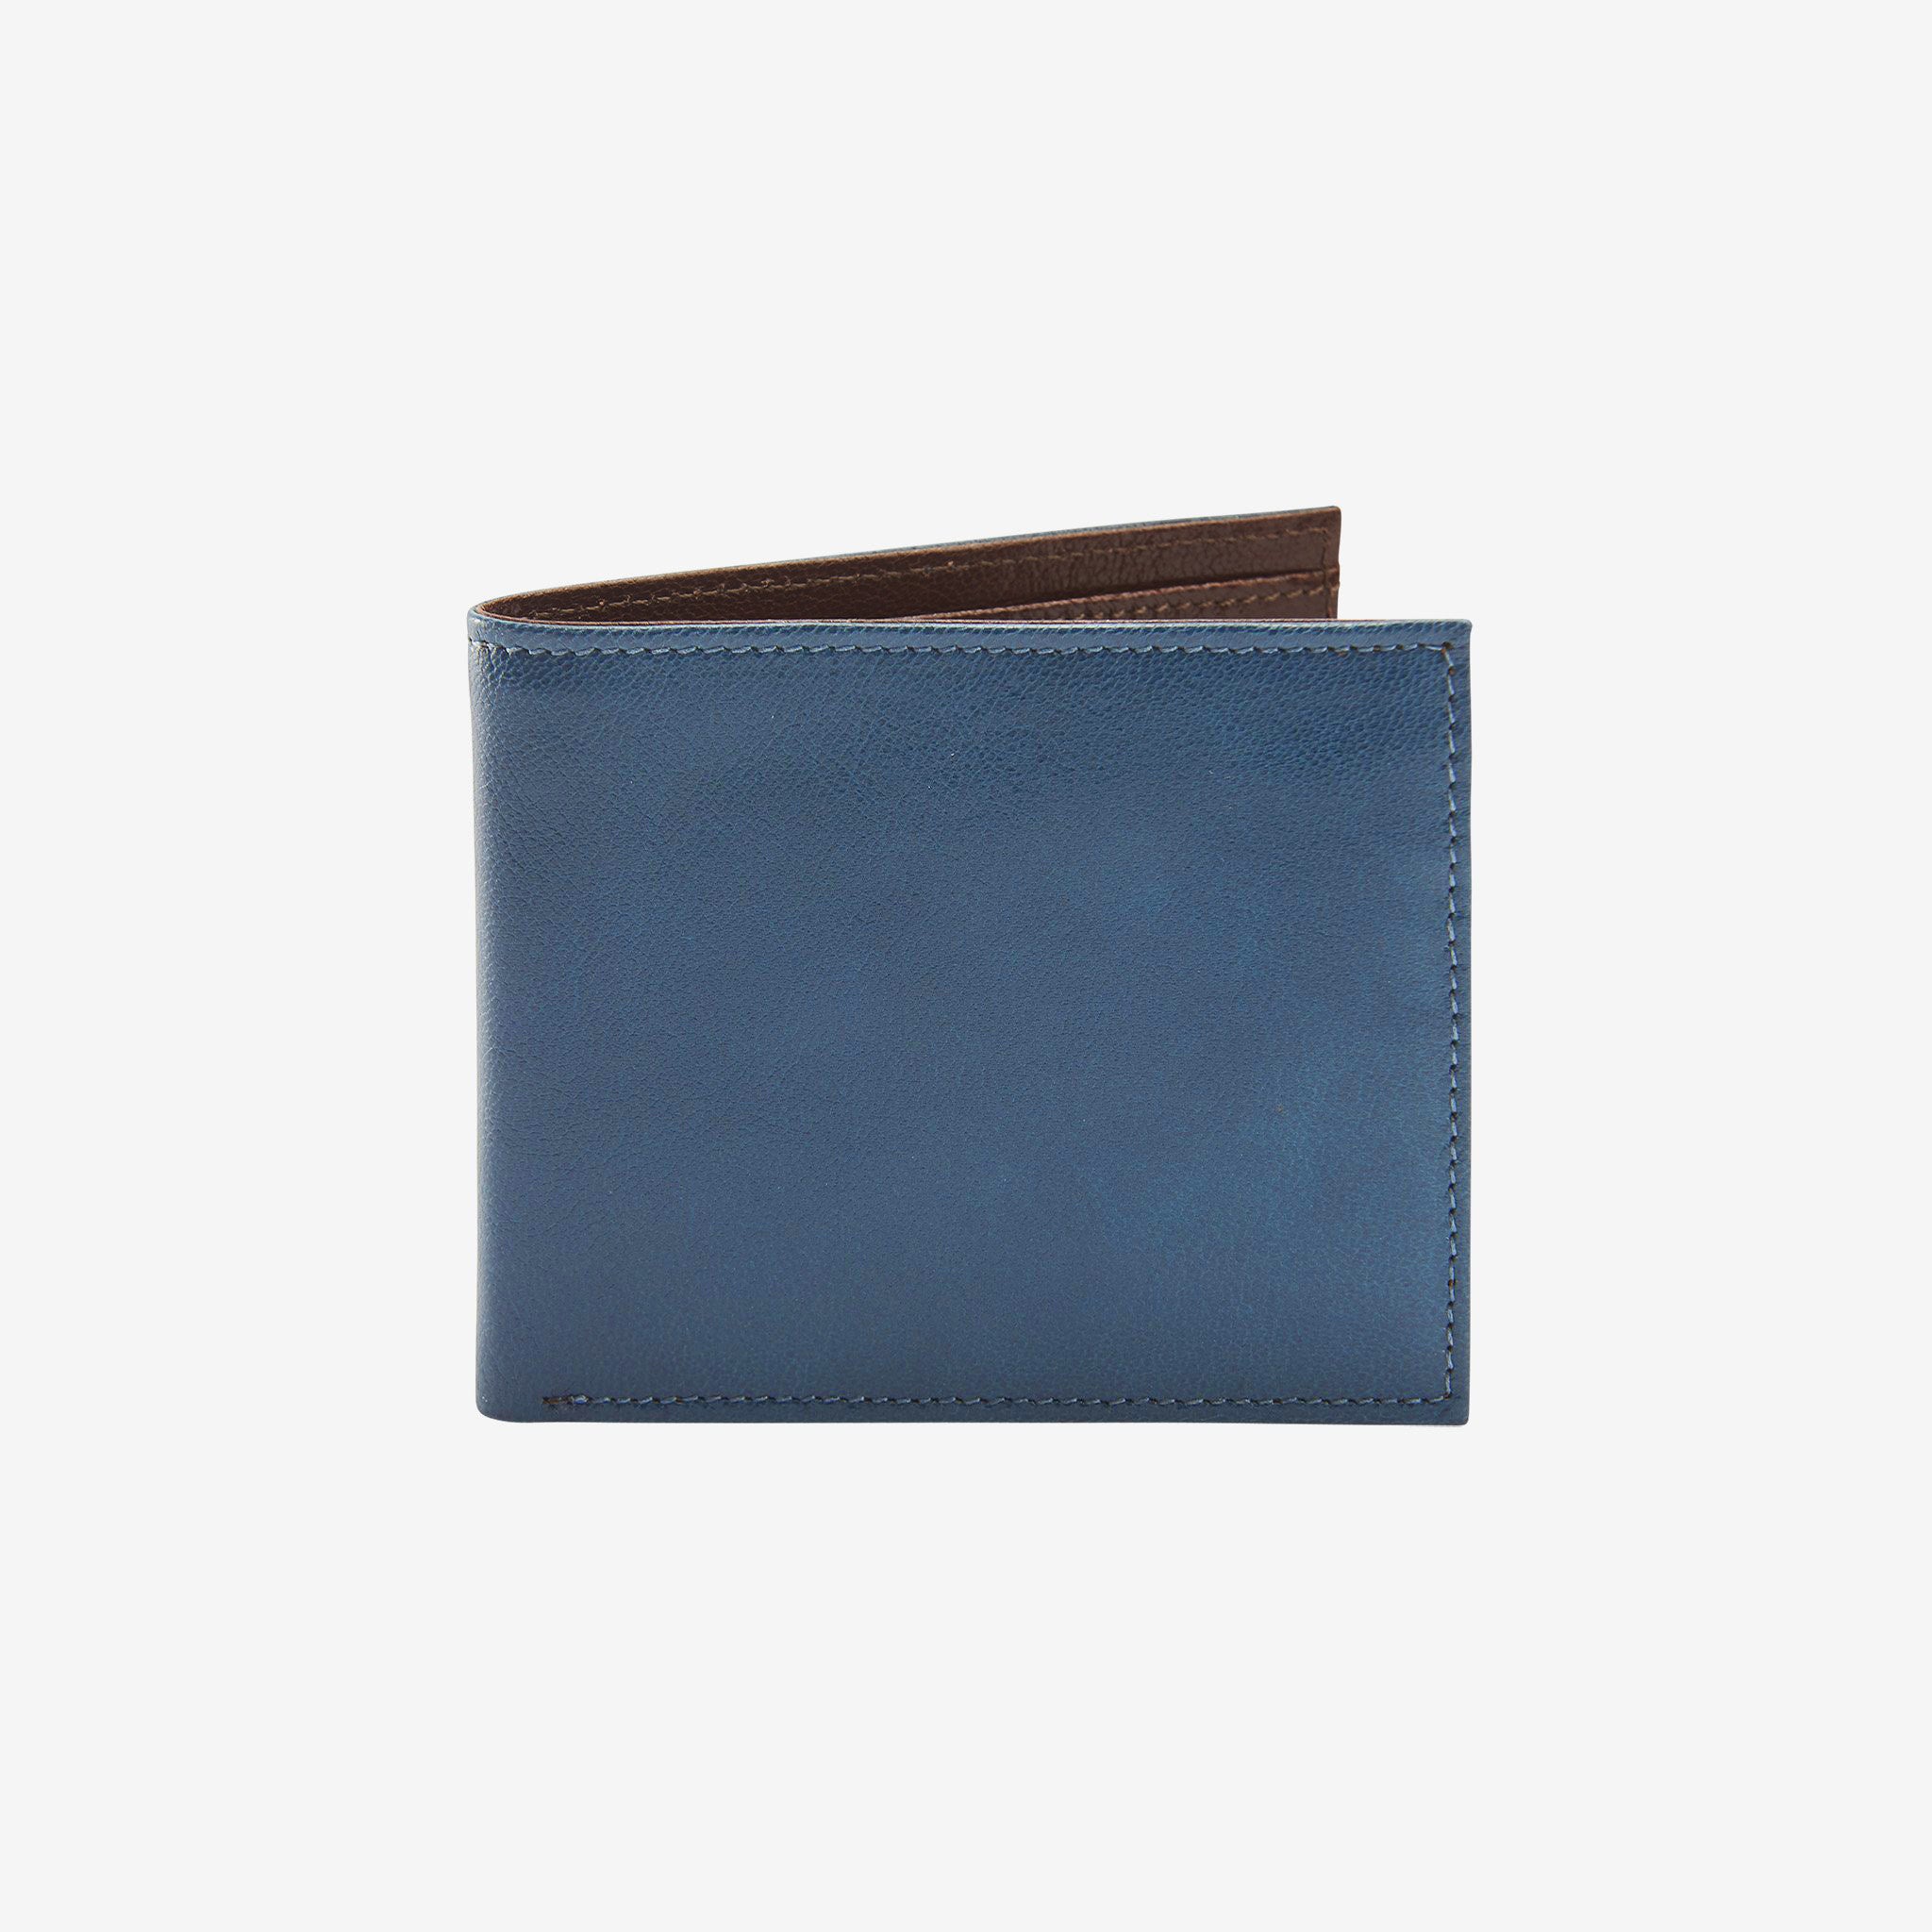 Leonardo Men's Billfold Wallet Chocolate/Blue